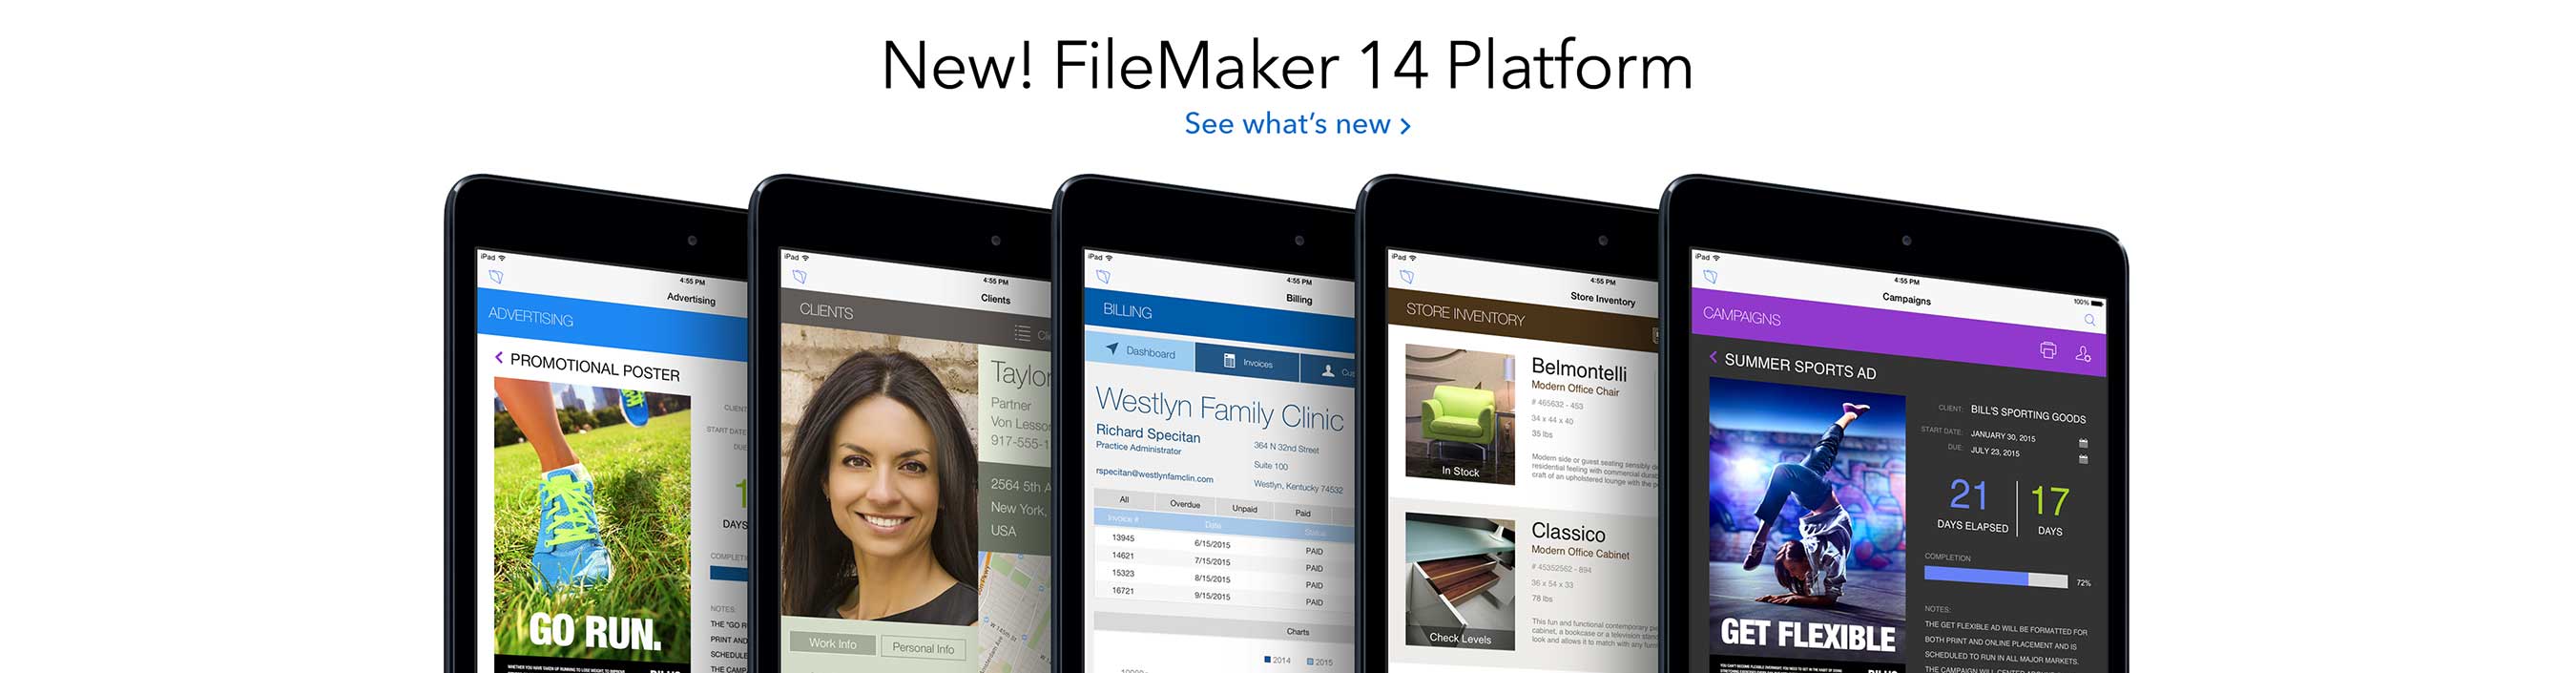 New FileMaker 14 Platform Ships